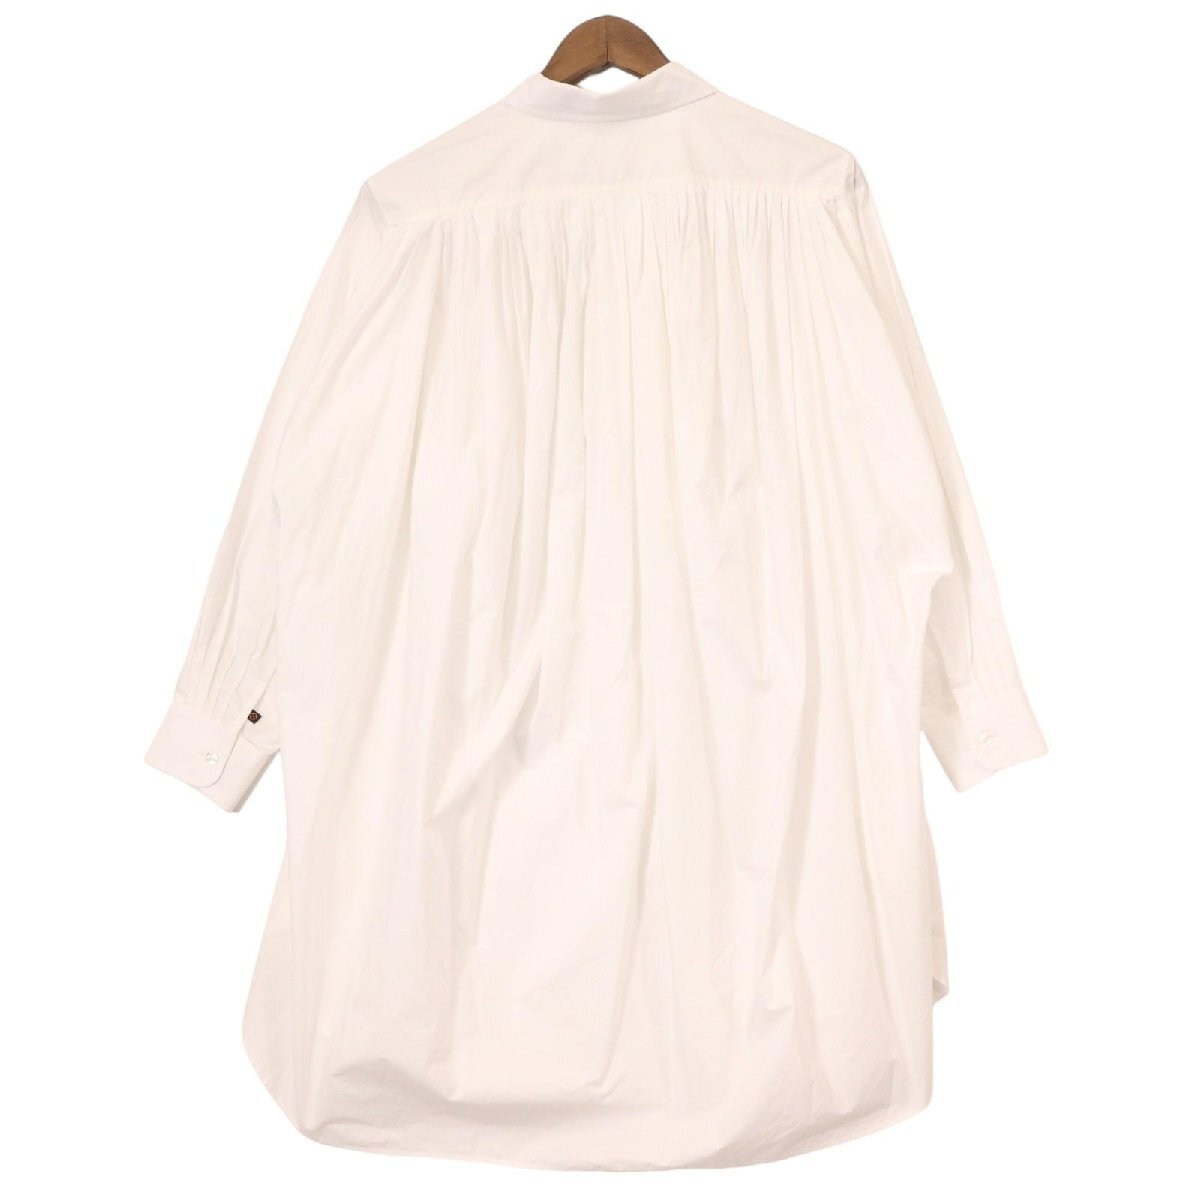 LOUIS VUITTON Louis Vuitton cotton long sleeve blouse shirt 36